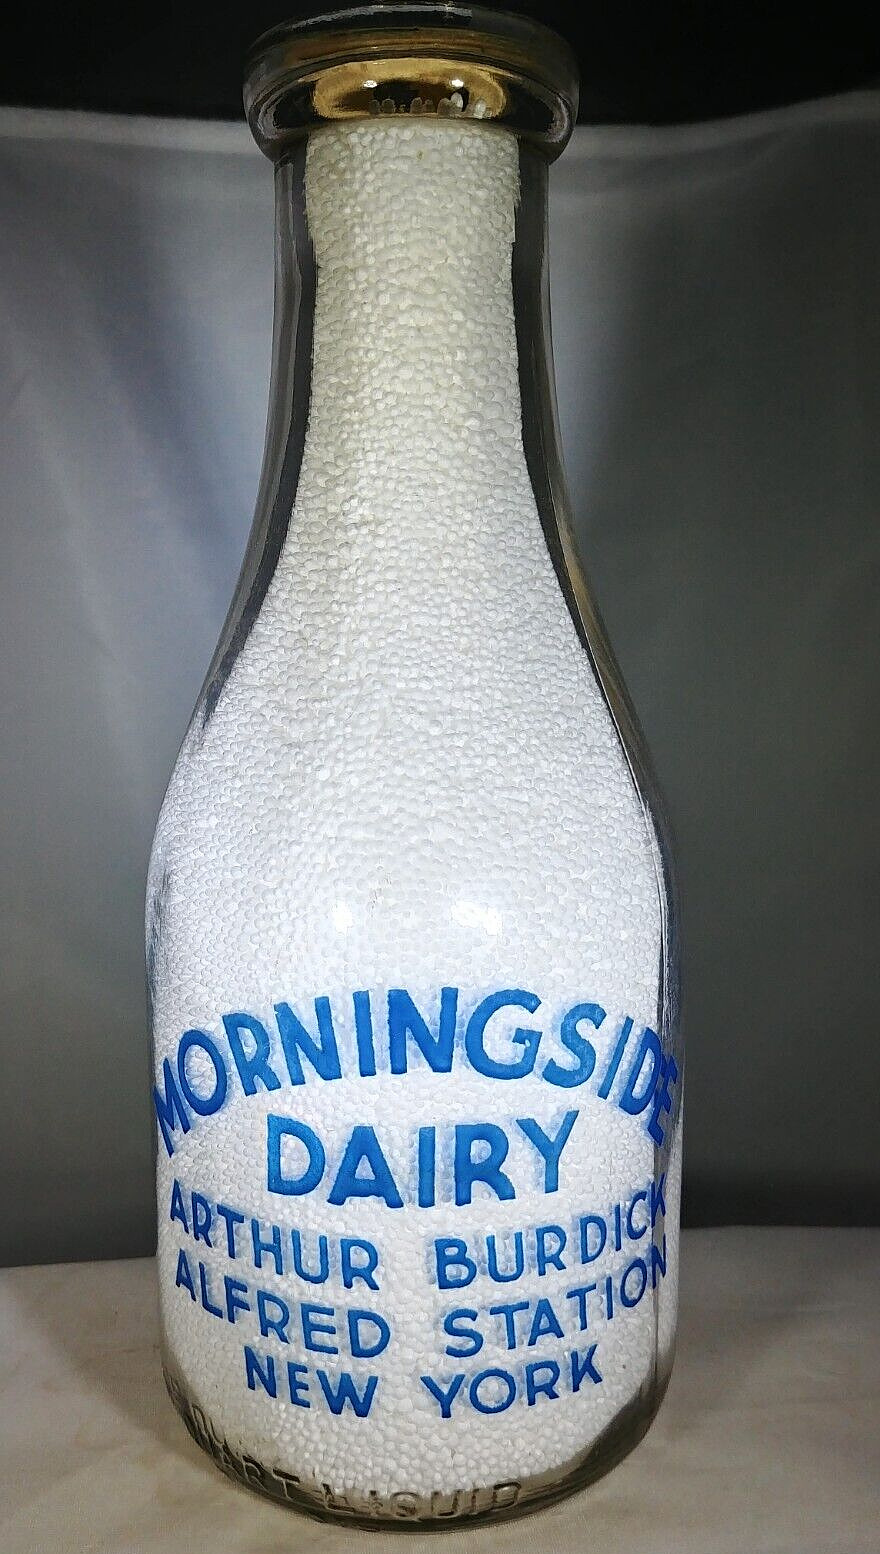 1942 Morningside Dairy, Arthur Burdick, Alfred Station, New York